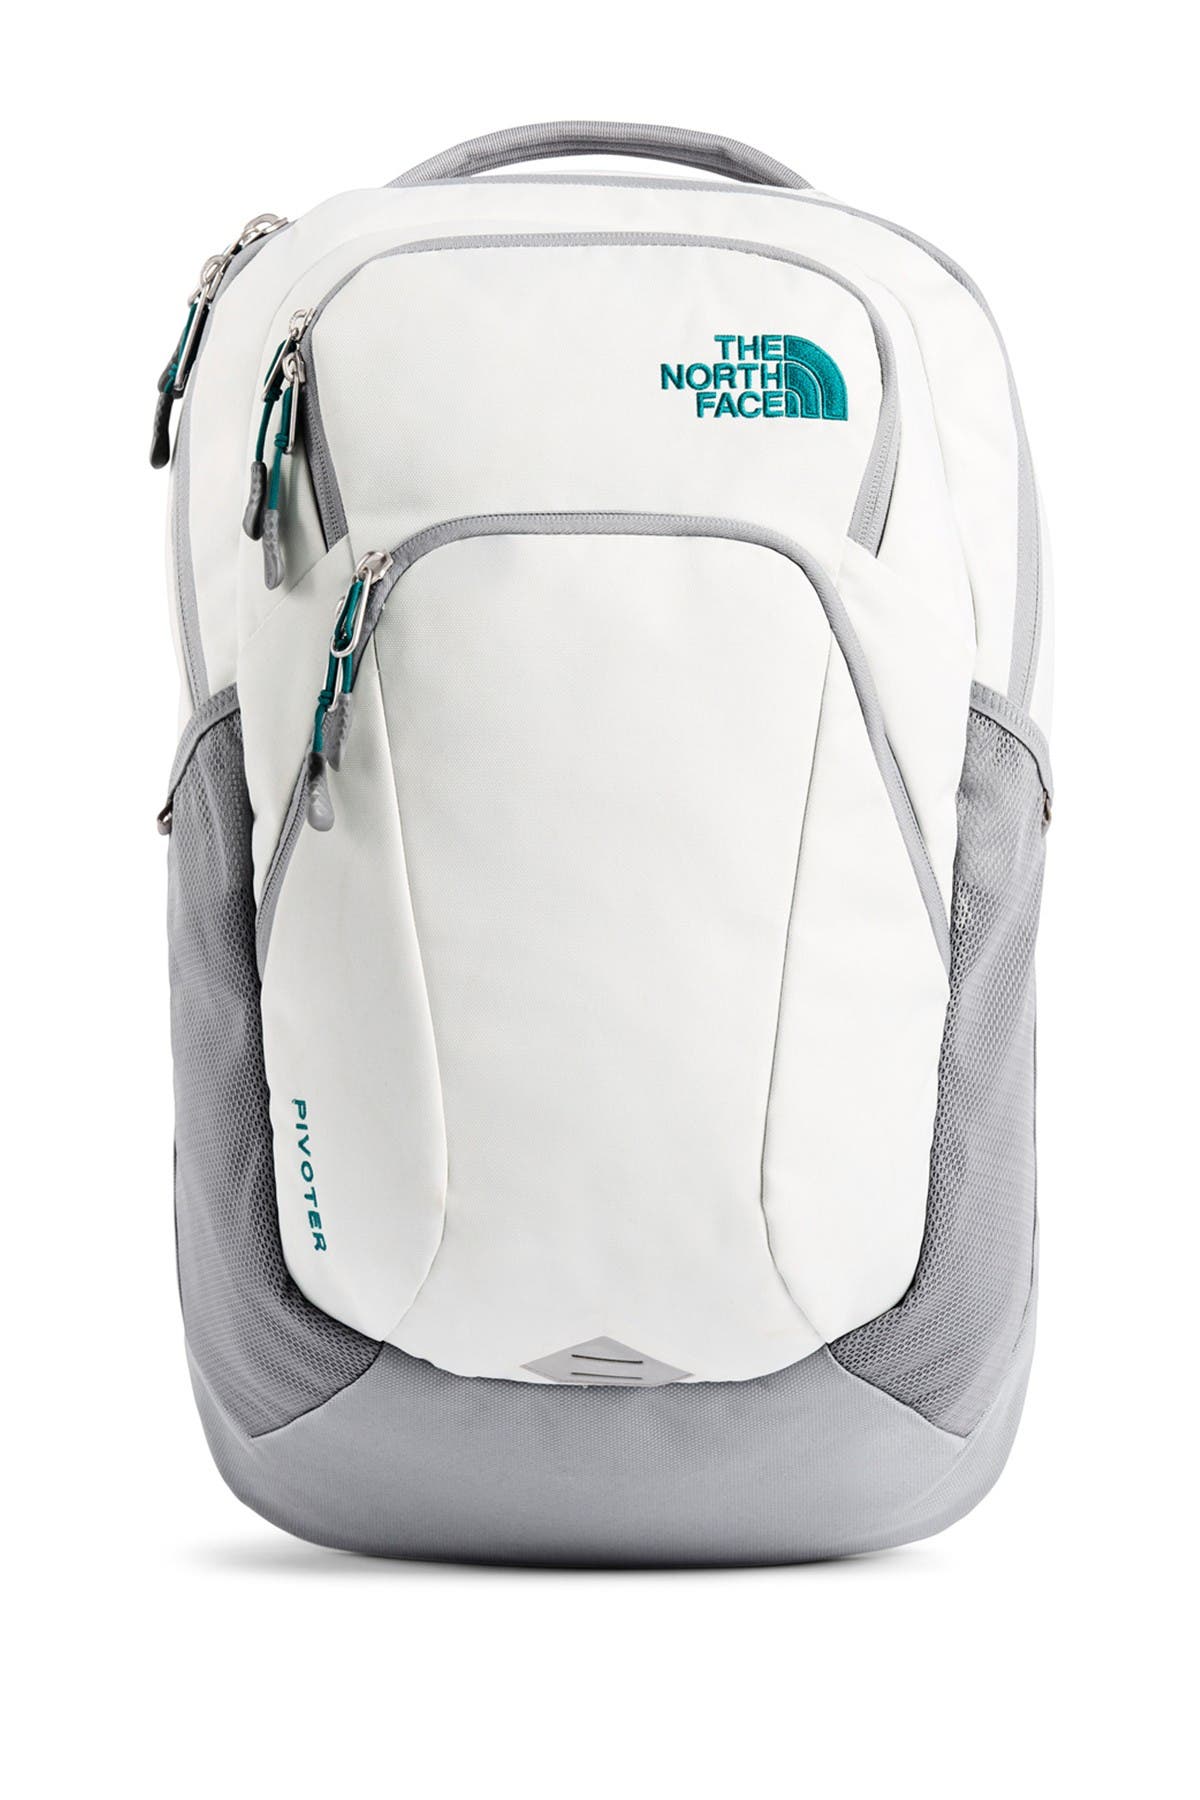 north face backpack nordstrom